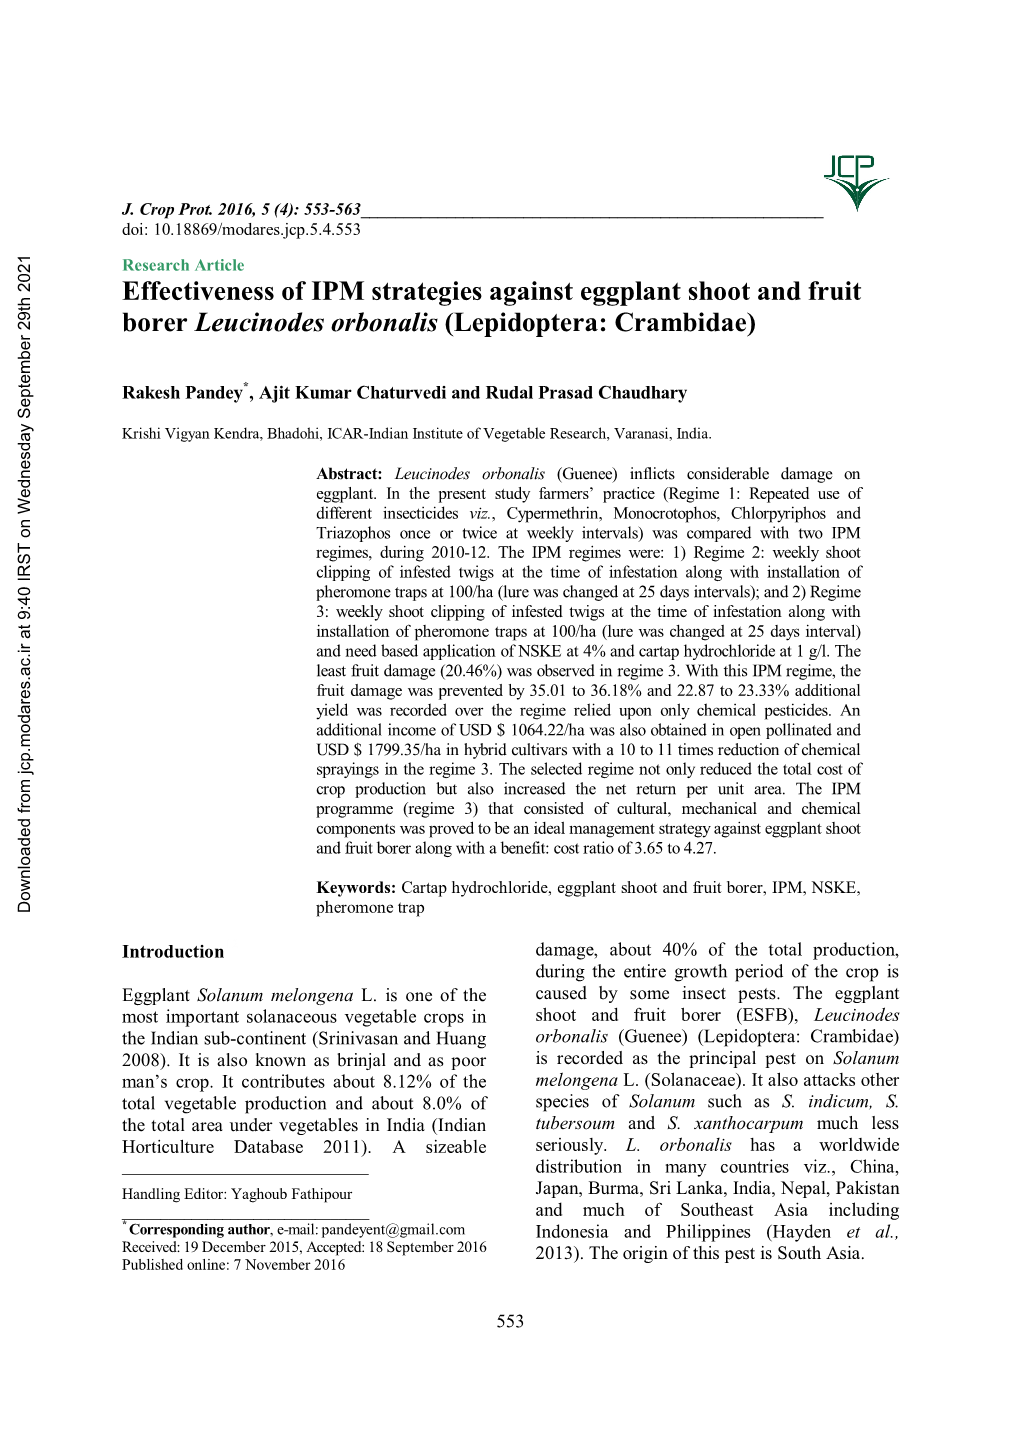 Effectiveness of IPM Strategies Against Eggplant Shoot and Fruit Borer Leucinodes Orbonalis (Lepidoptera: Crambidae)